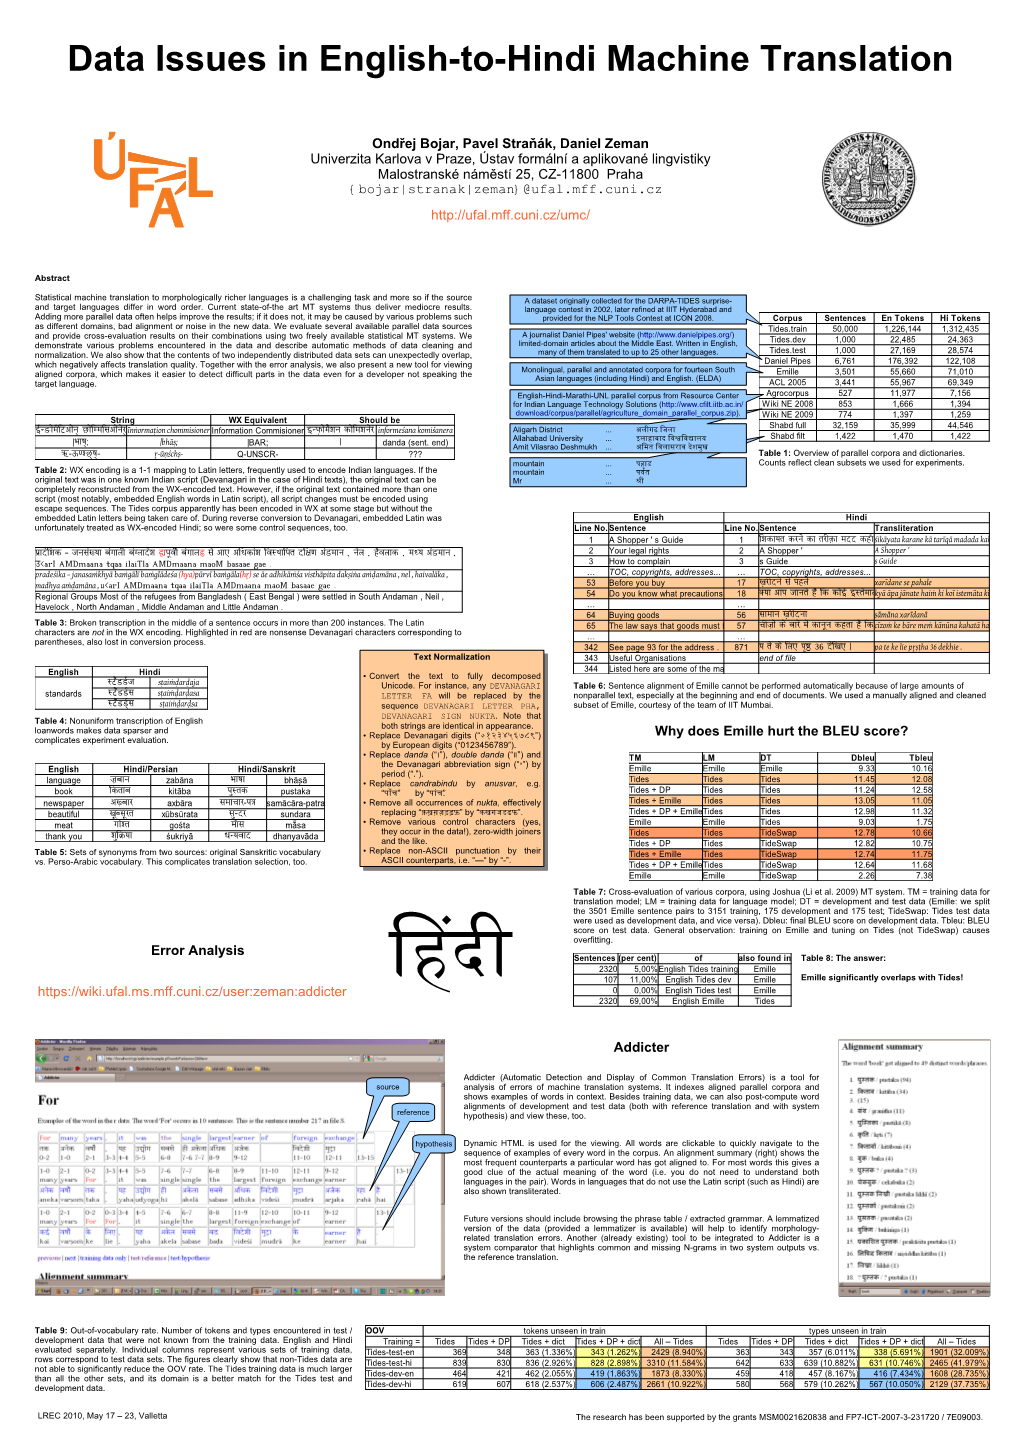 Data Issues in English-To-Hindi Machine Translation